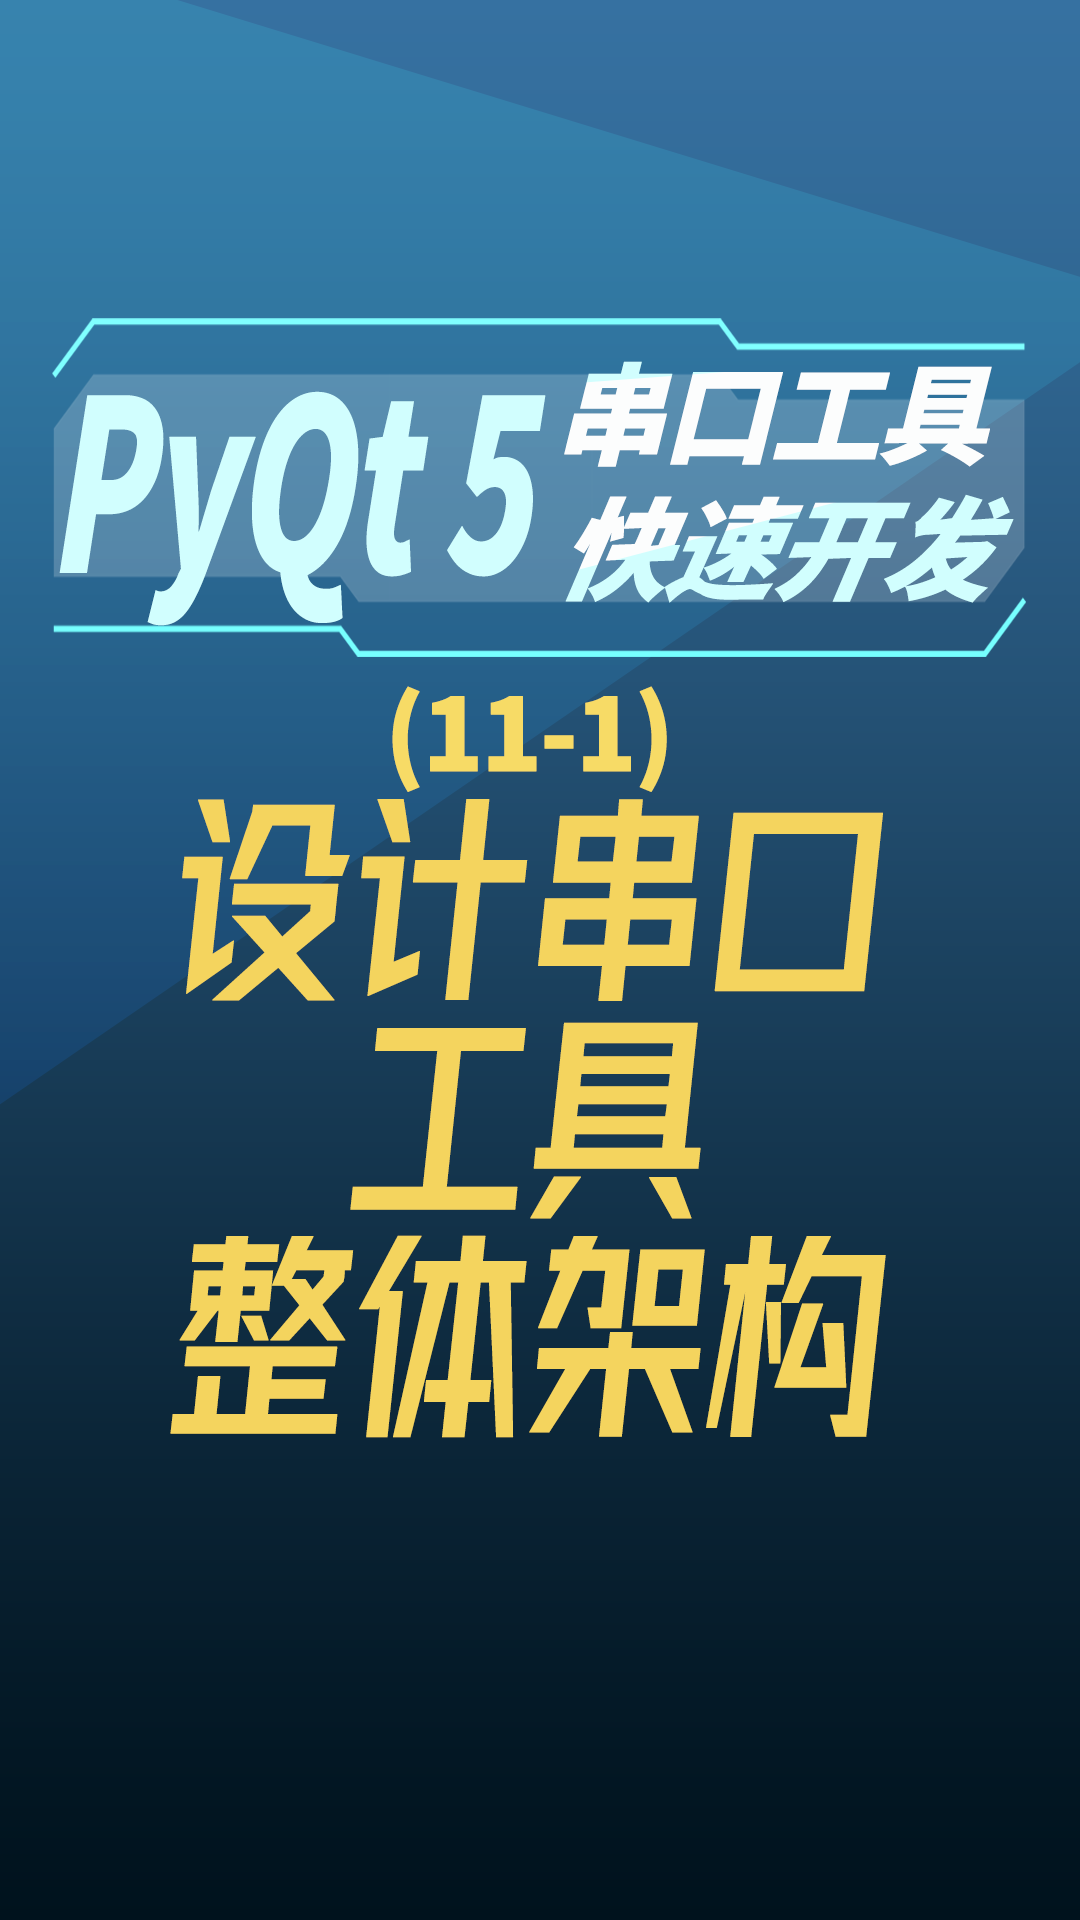 pyqt5串口工具快速开发11-1设计串口工具整体架构#串口工具开发 